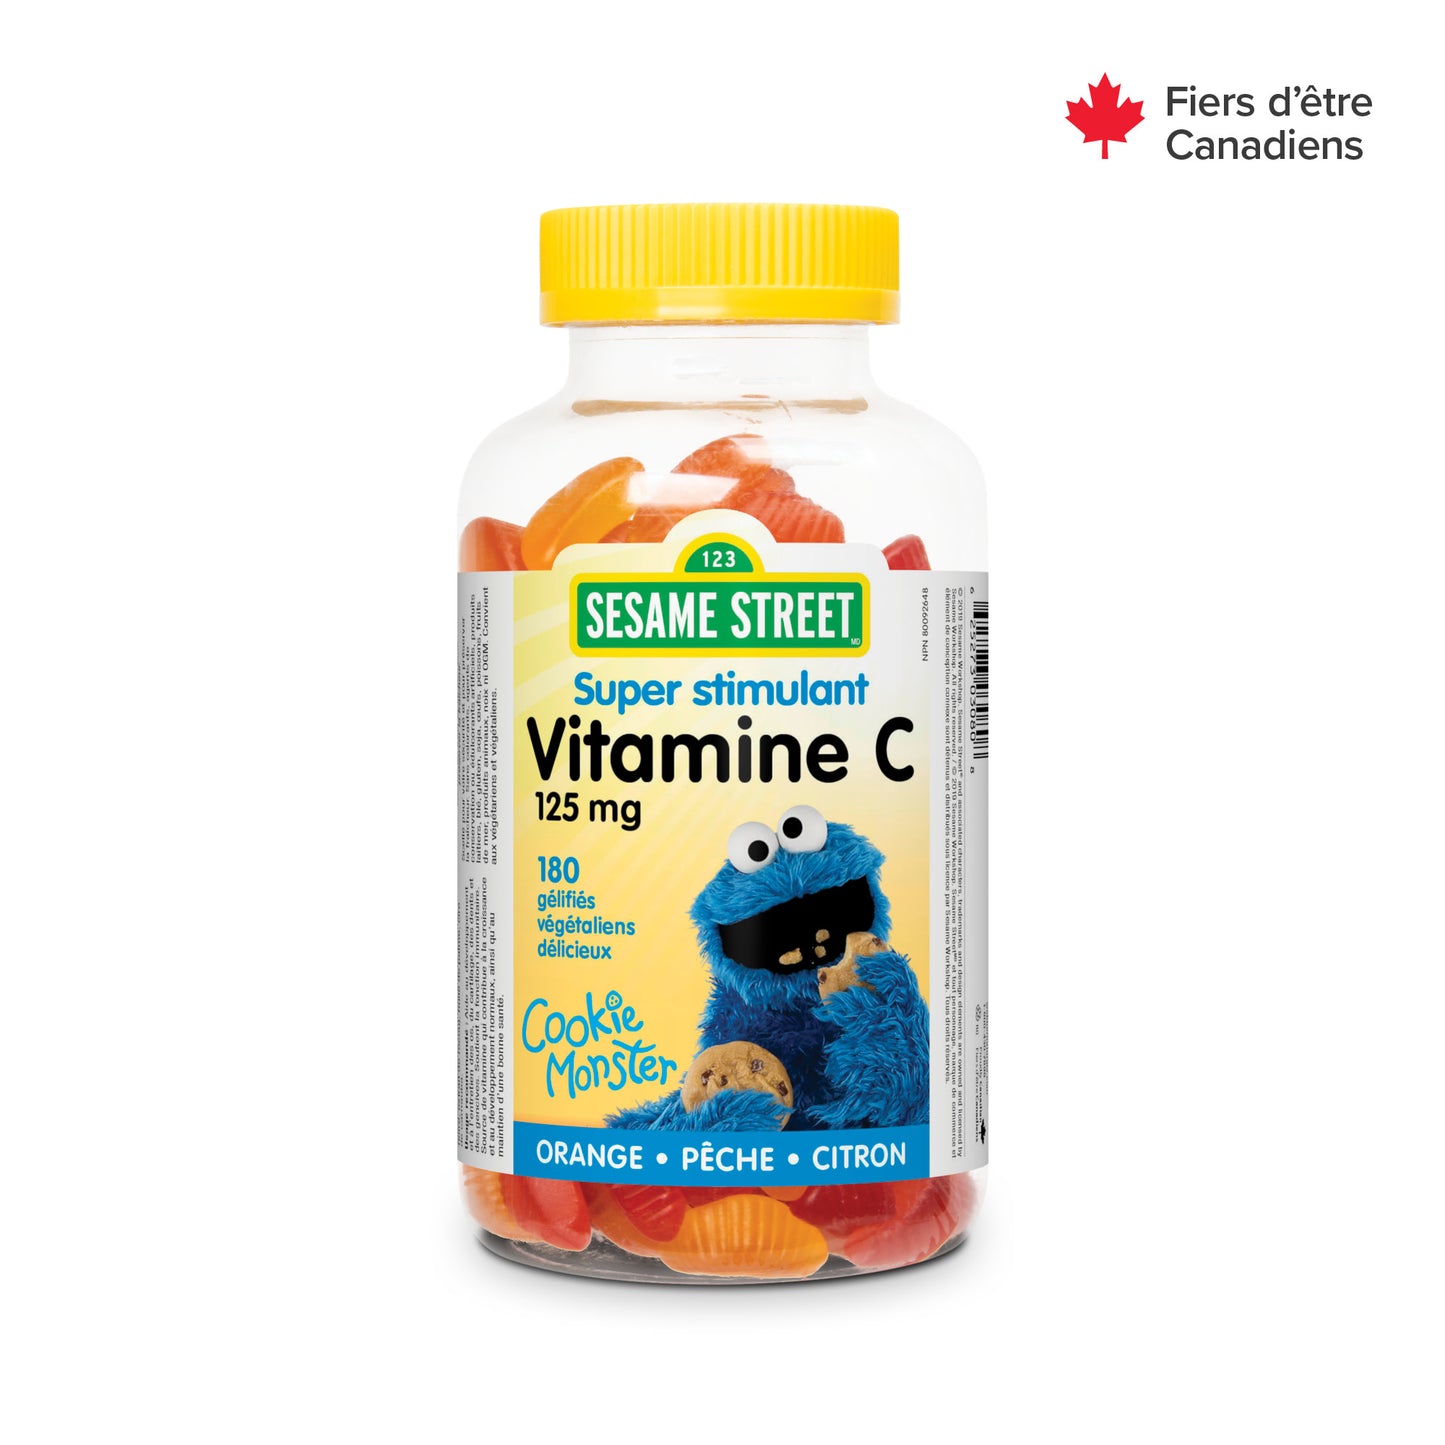 Vitamine C 125 mg orange • pêche • citron for Sesame Street®|v|hi-res|WN3080